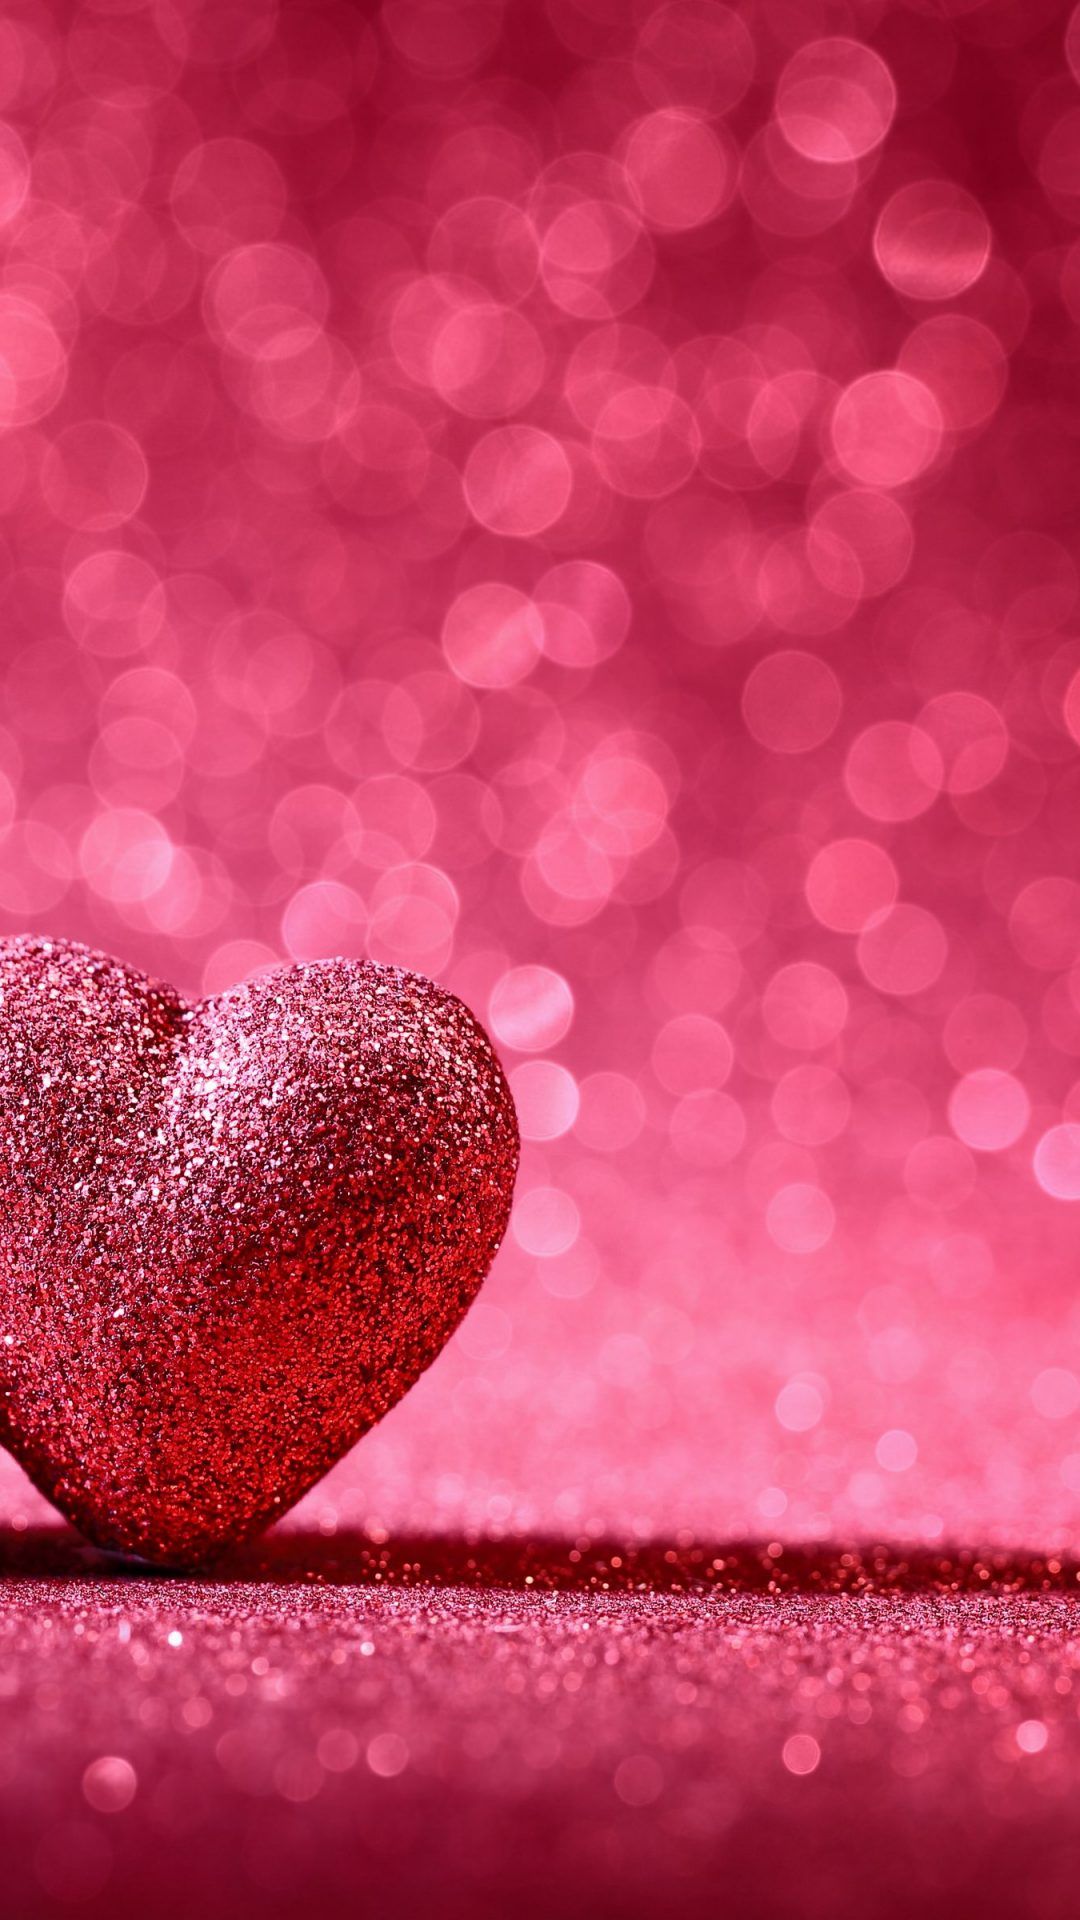 love images wallpaper,heart,pink,red,love,glitter